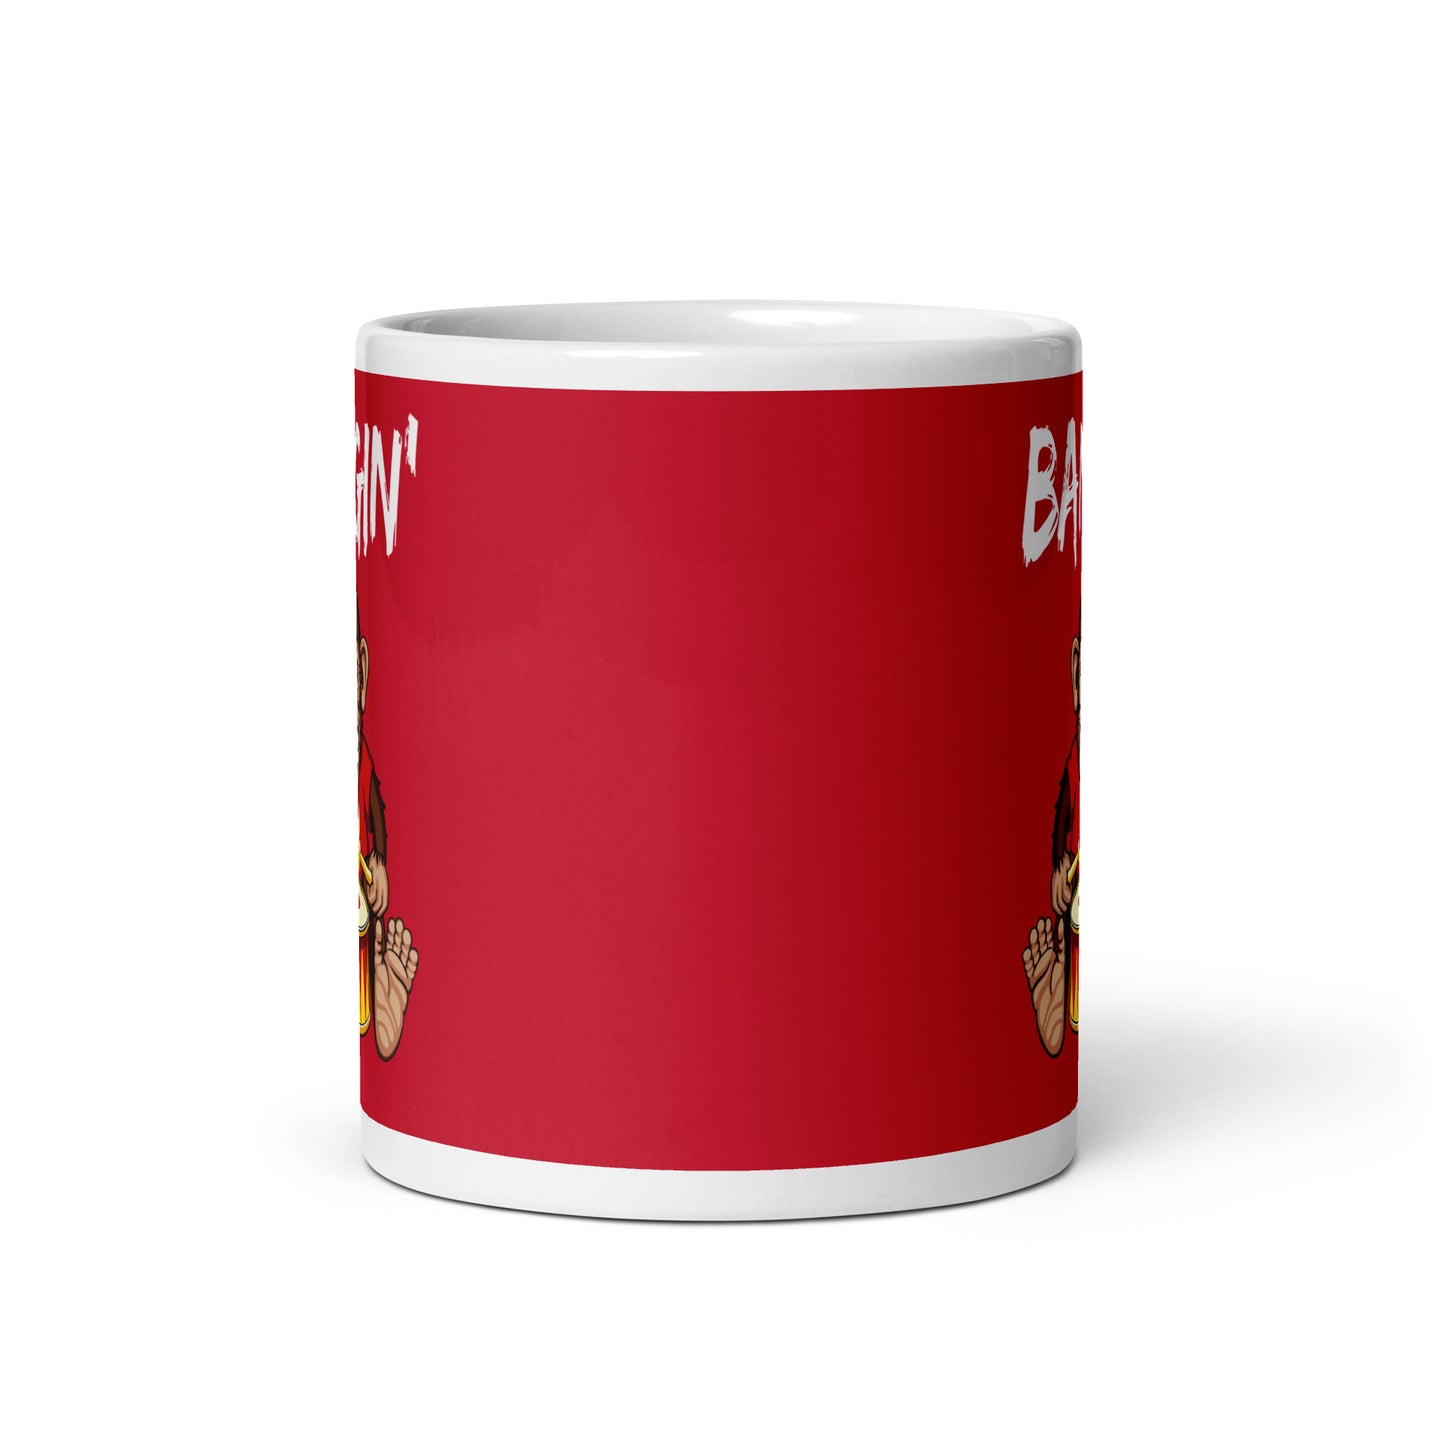 Bangin Drummer Monkey Mug, Red, by Stormseye Design